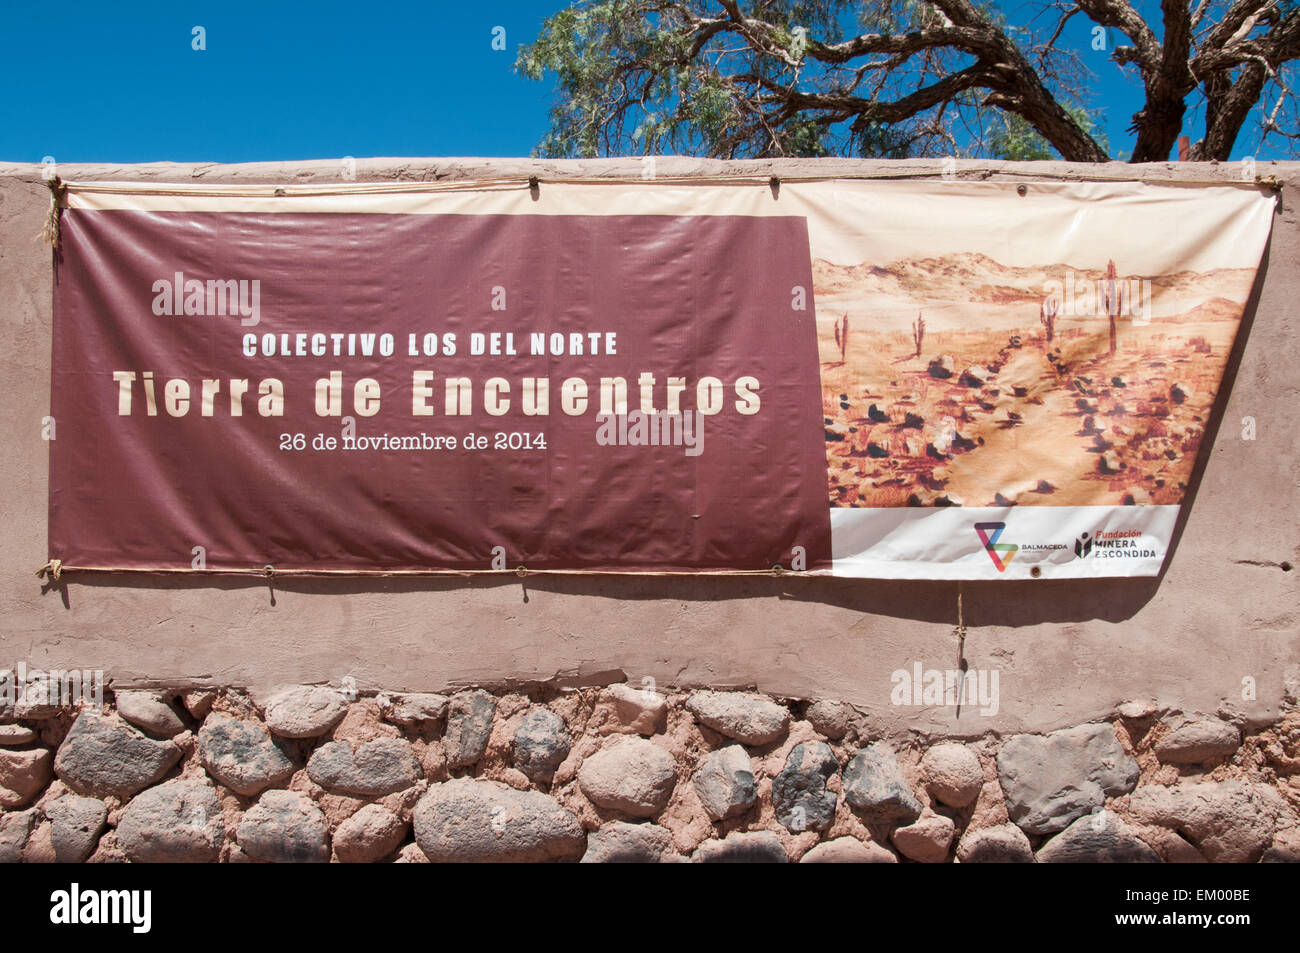 Signs announce cultural events sponsored in part by Fundacion Minera Escondida in San Pedro de Atacama, northern Chile Stock Photo